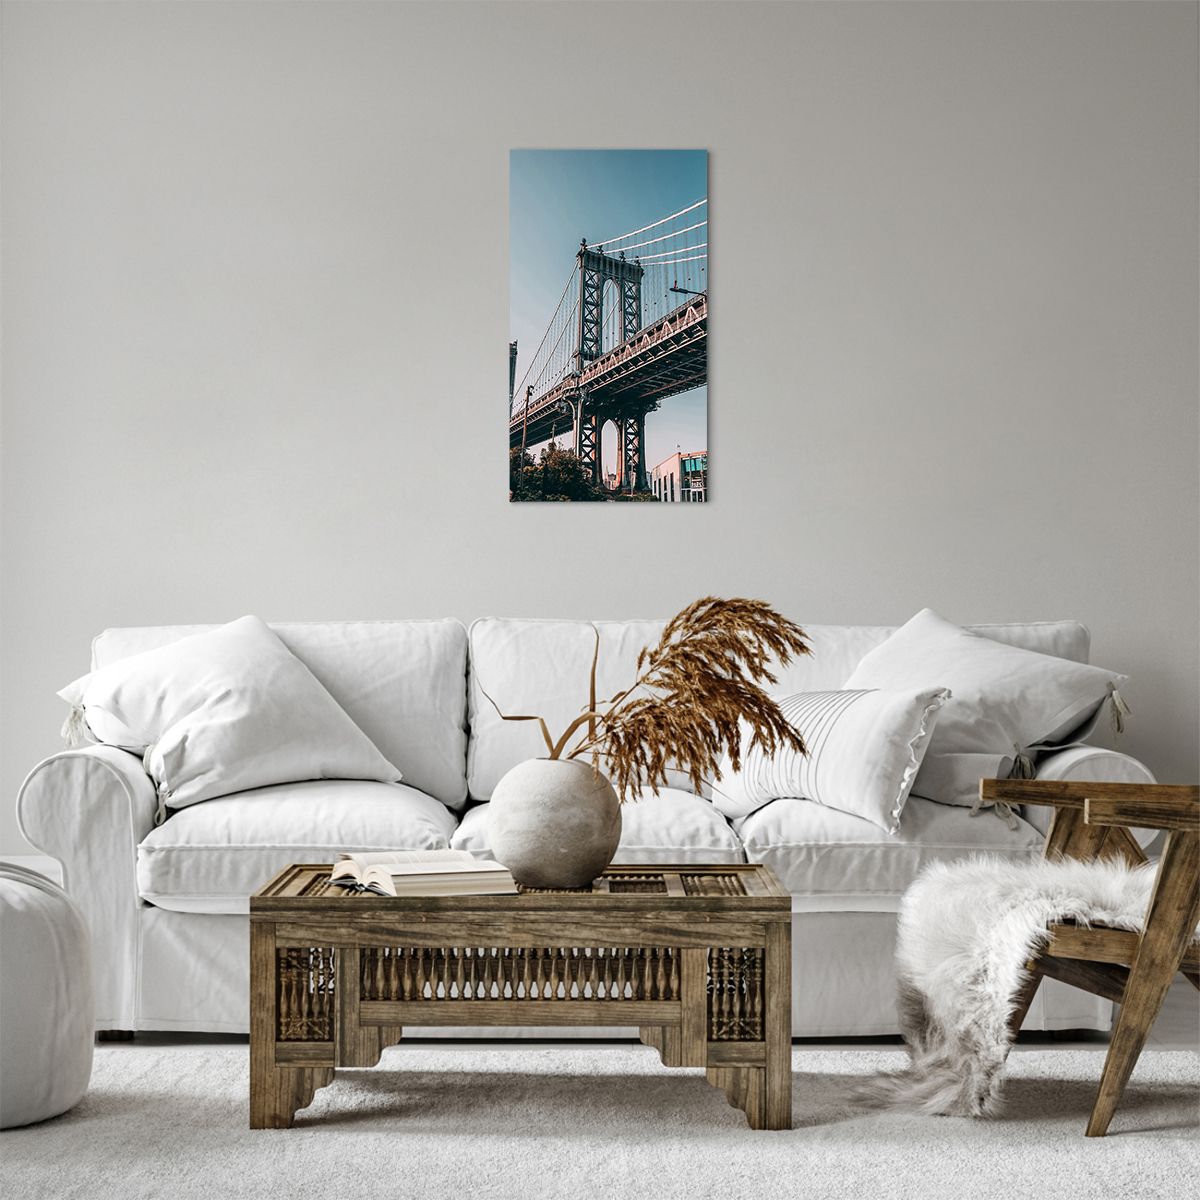 Quadro su tela New York, Quadro su tela Ponte Di Brooklyn, Quadro su tela Architettura, Quadro su tela Città, Quadro su tela Viaggi